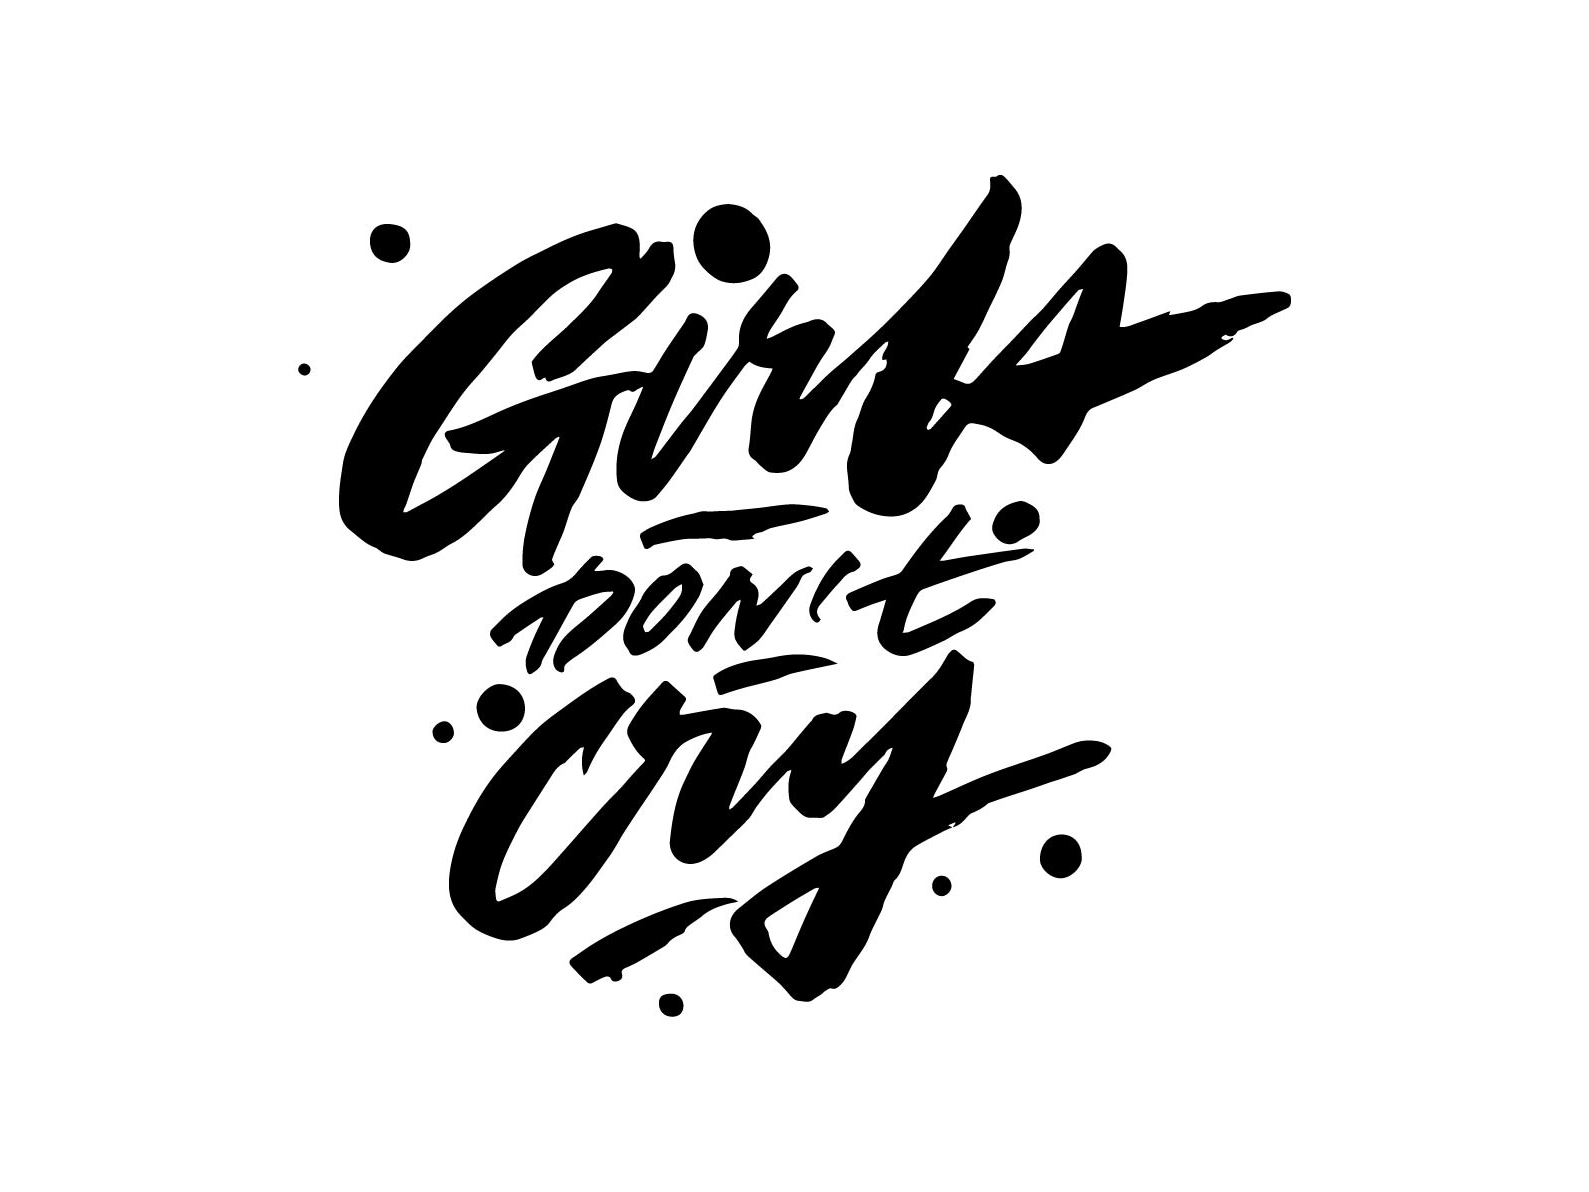 My brush tag "Girls don't cry" by kirillrichert on Dribbble